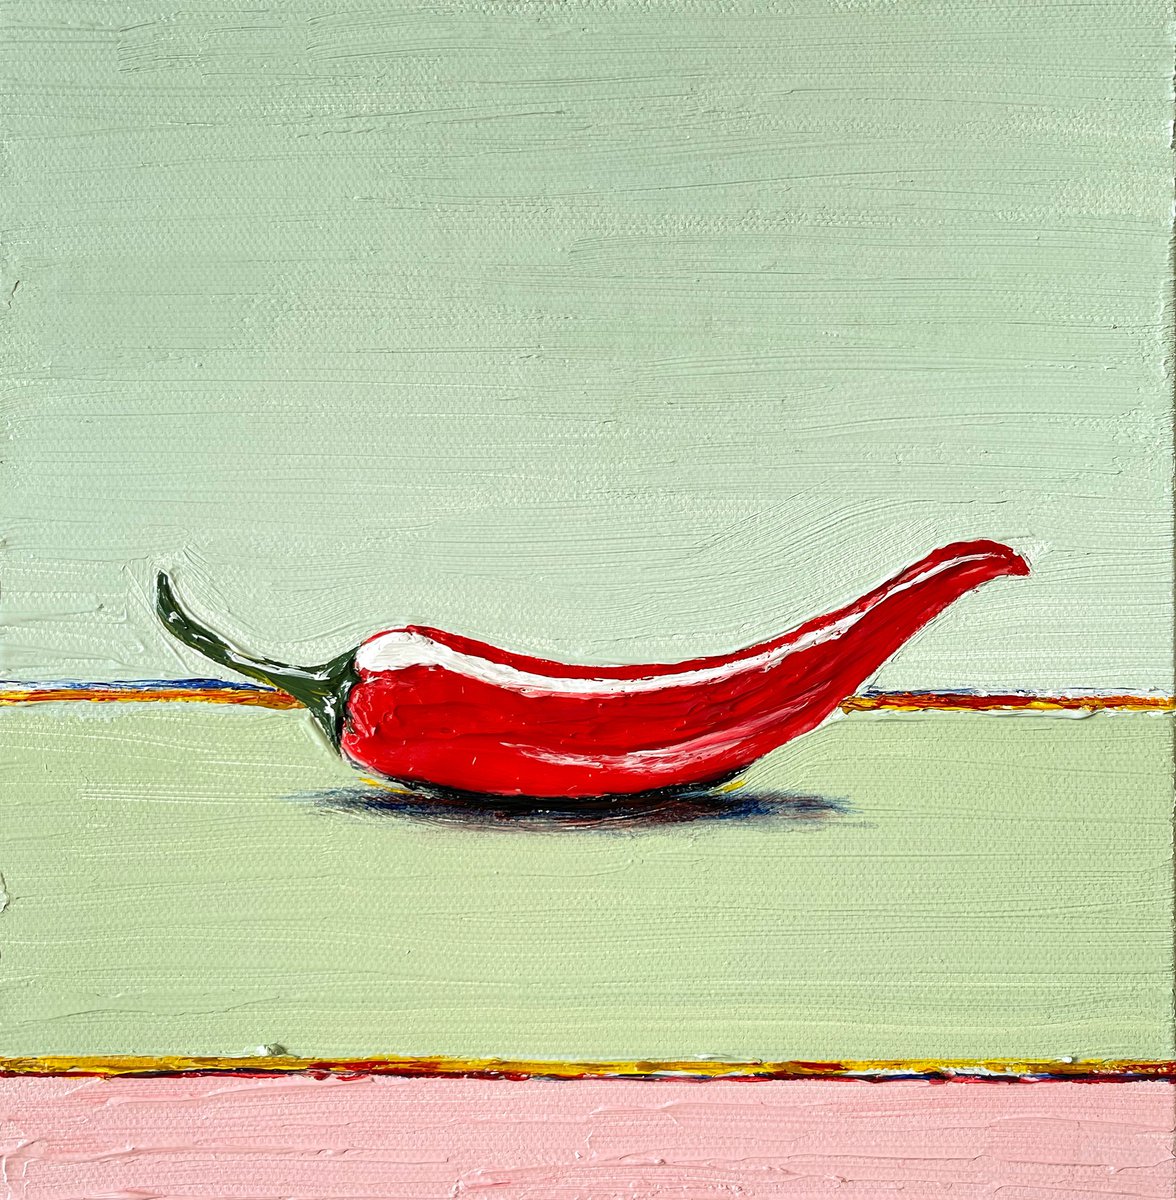 Chili pepper by Maiia Axton Studio